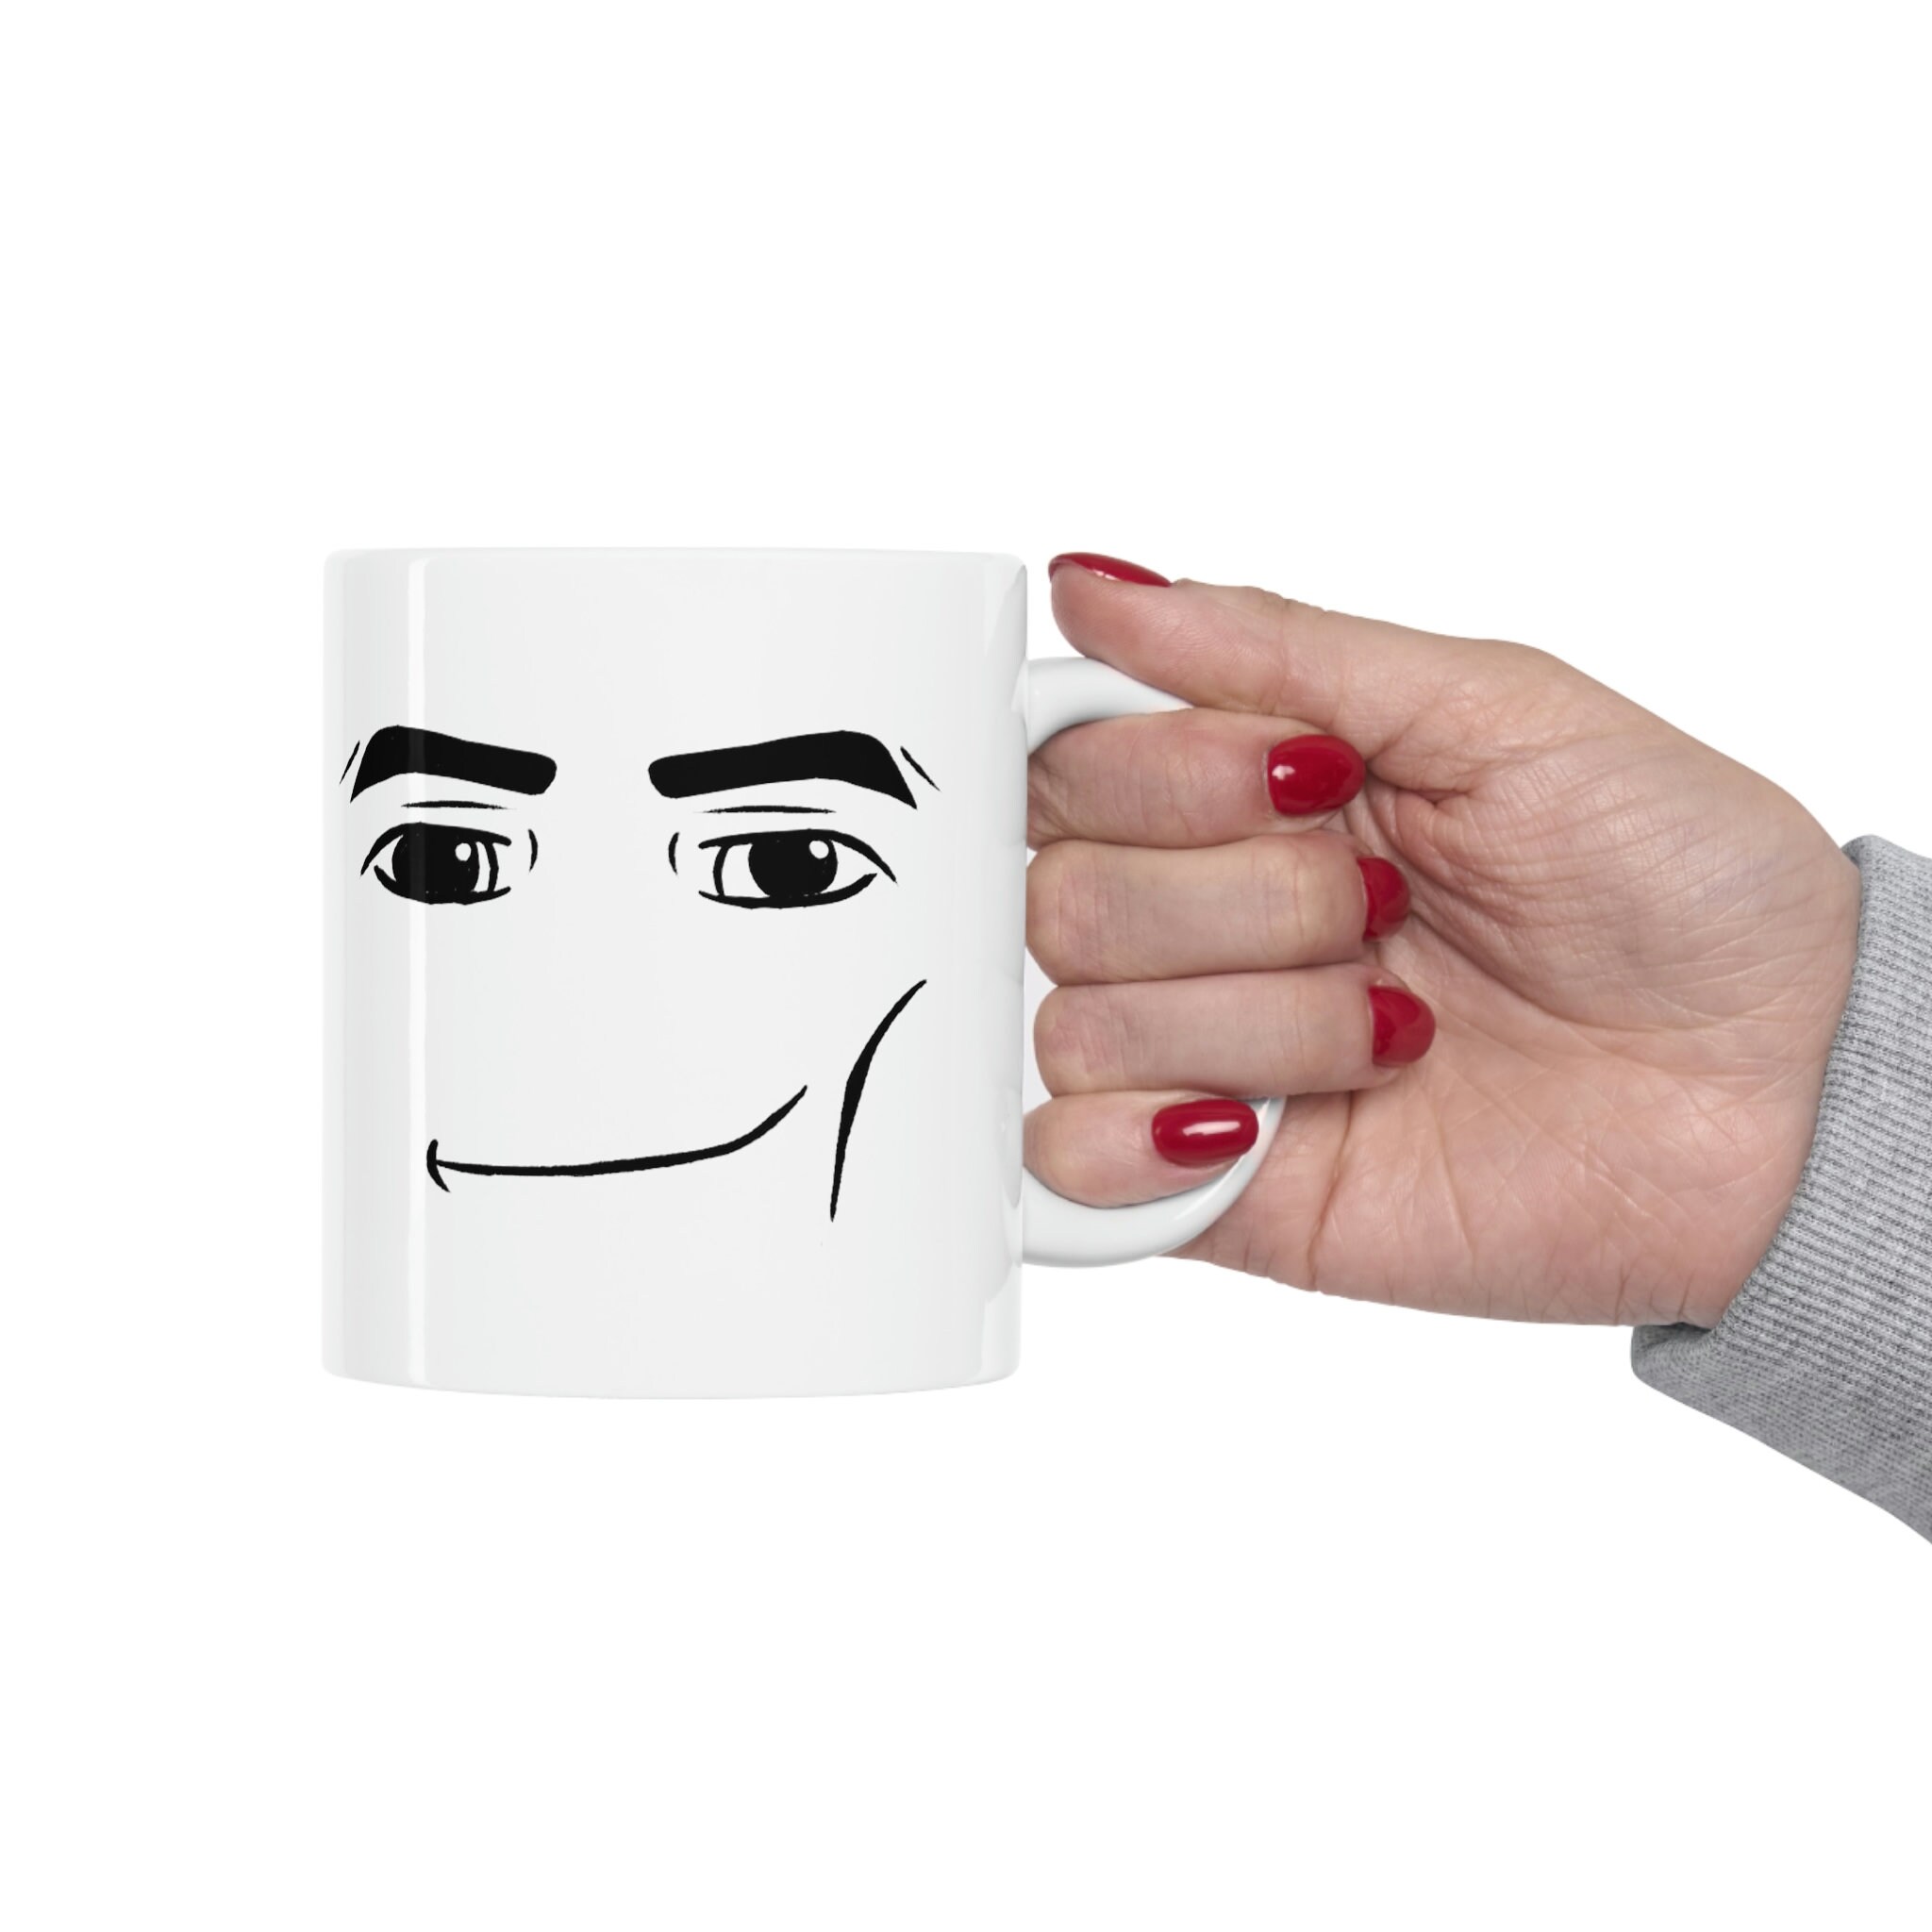 LITTLE MAN IS HERE…. MAN FACE MUG FOREVER the #roblox man face mug